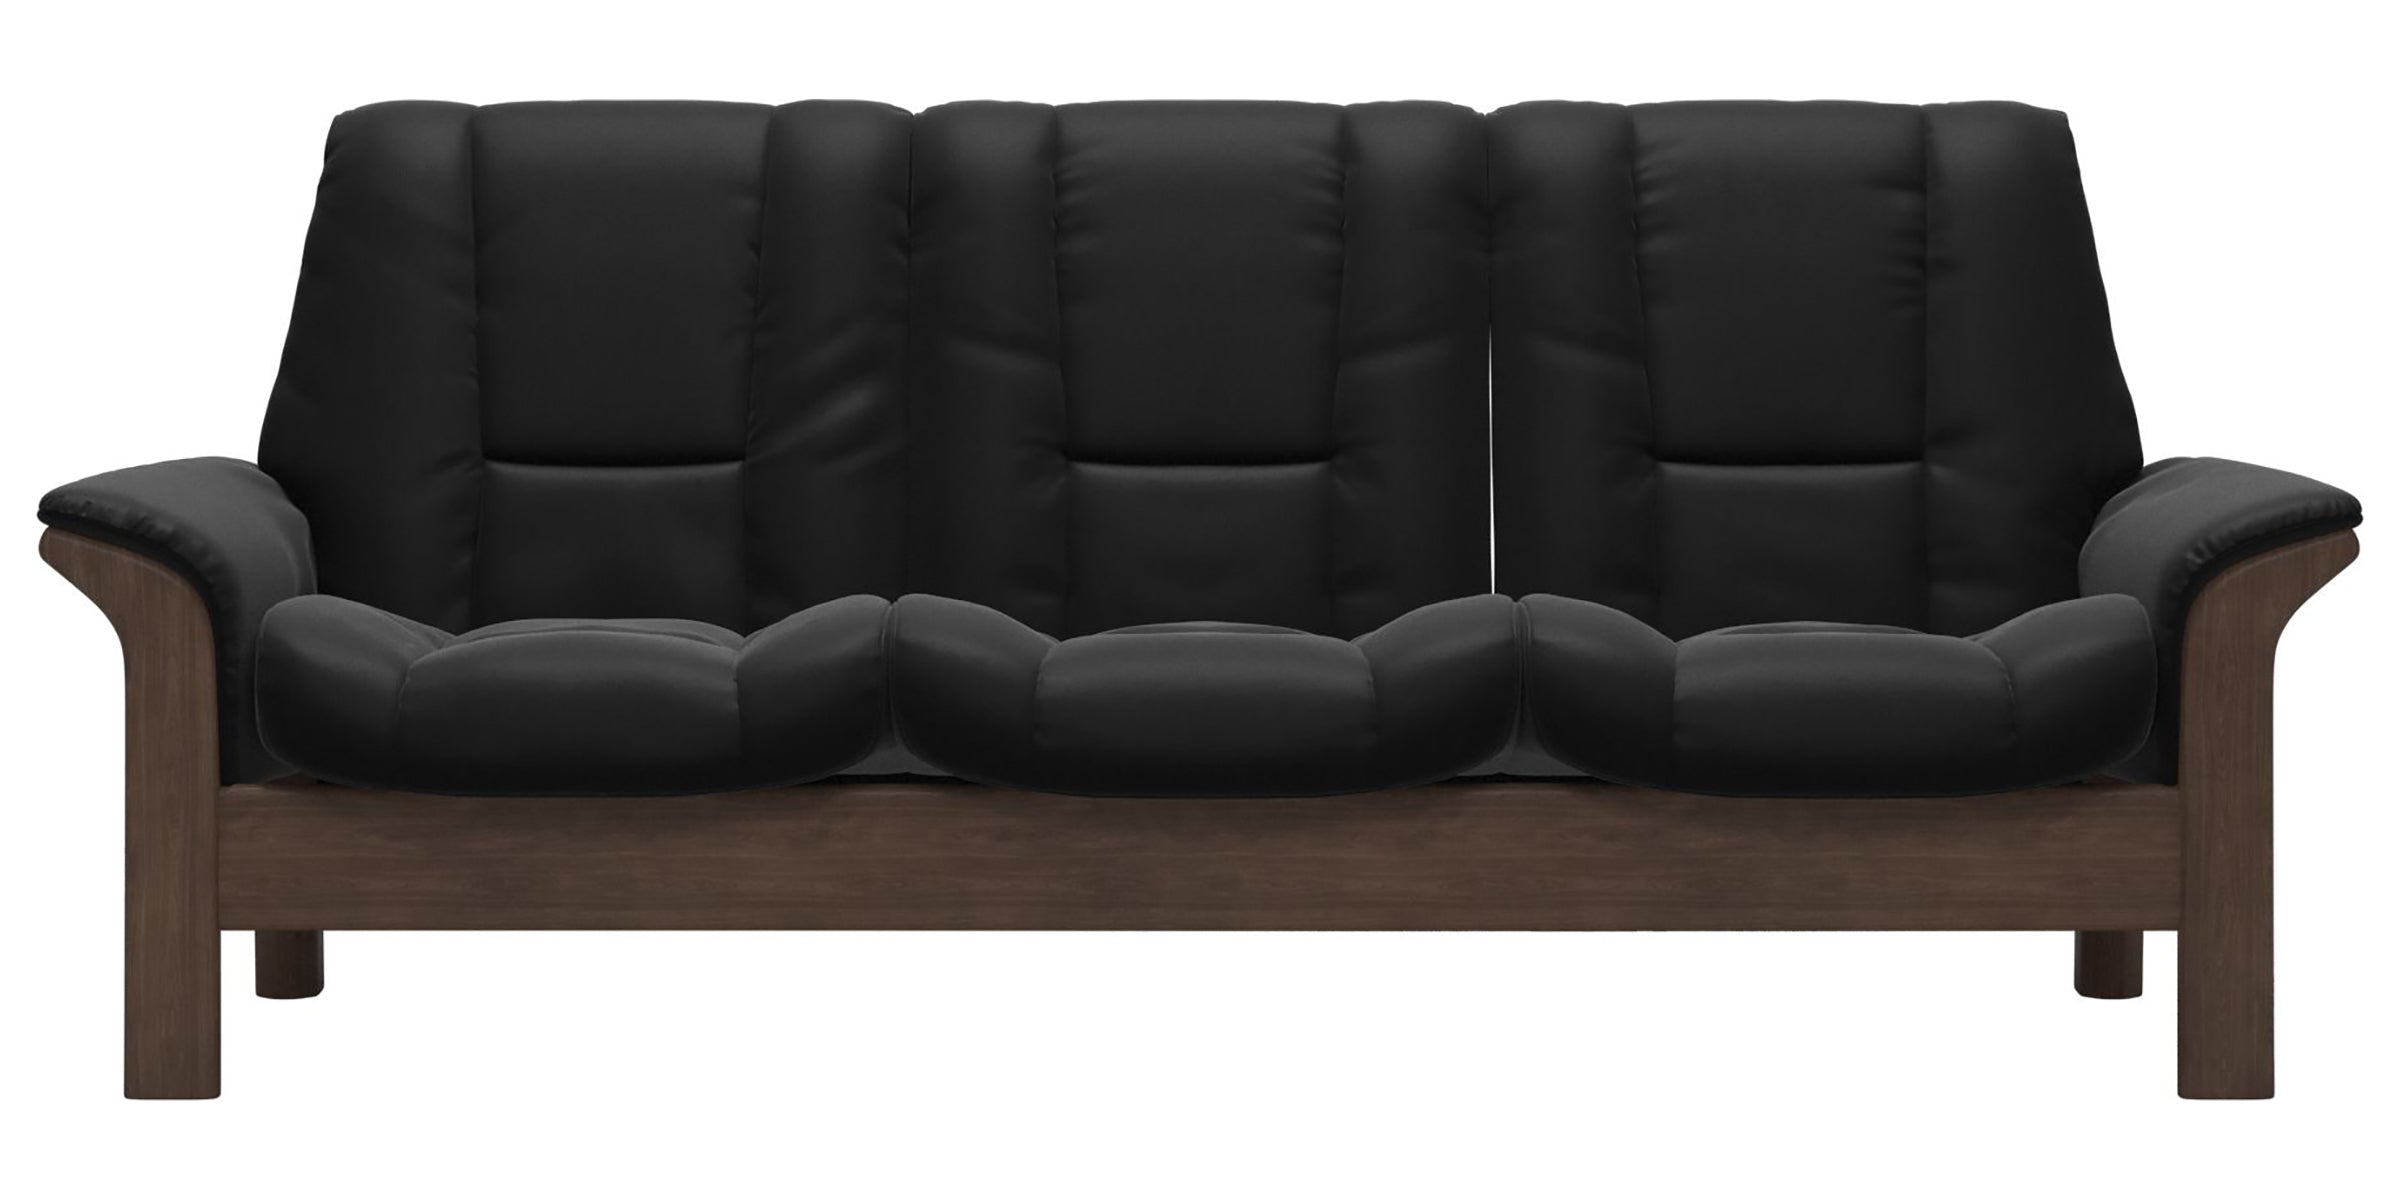 Paloma Leather Black and Walnut Base | Stressless Windsor 3-Seater Low Back Sofa | Valley Ridge Furniture